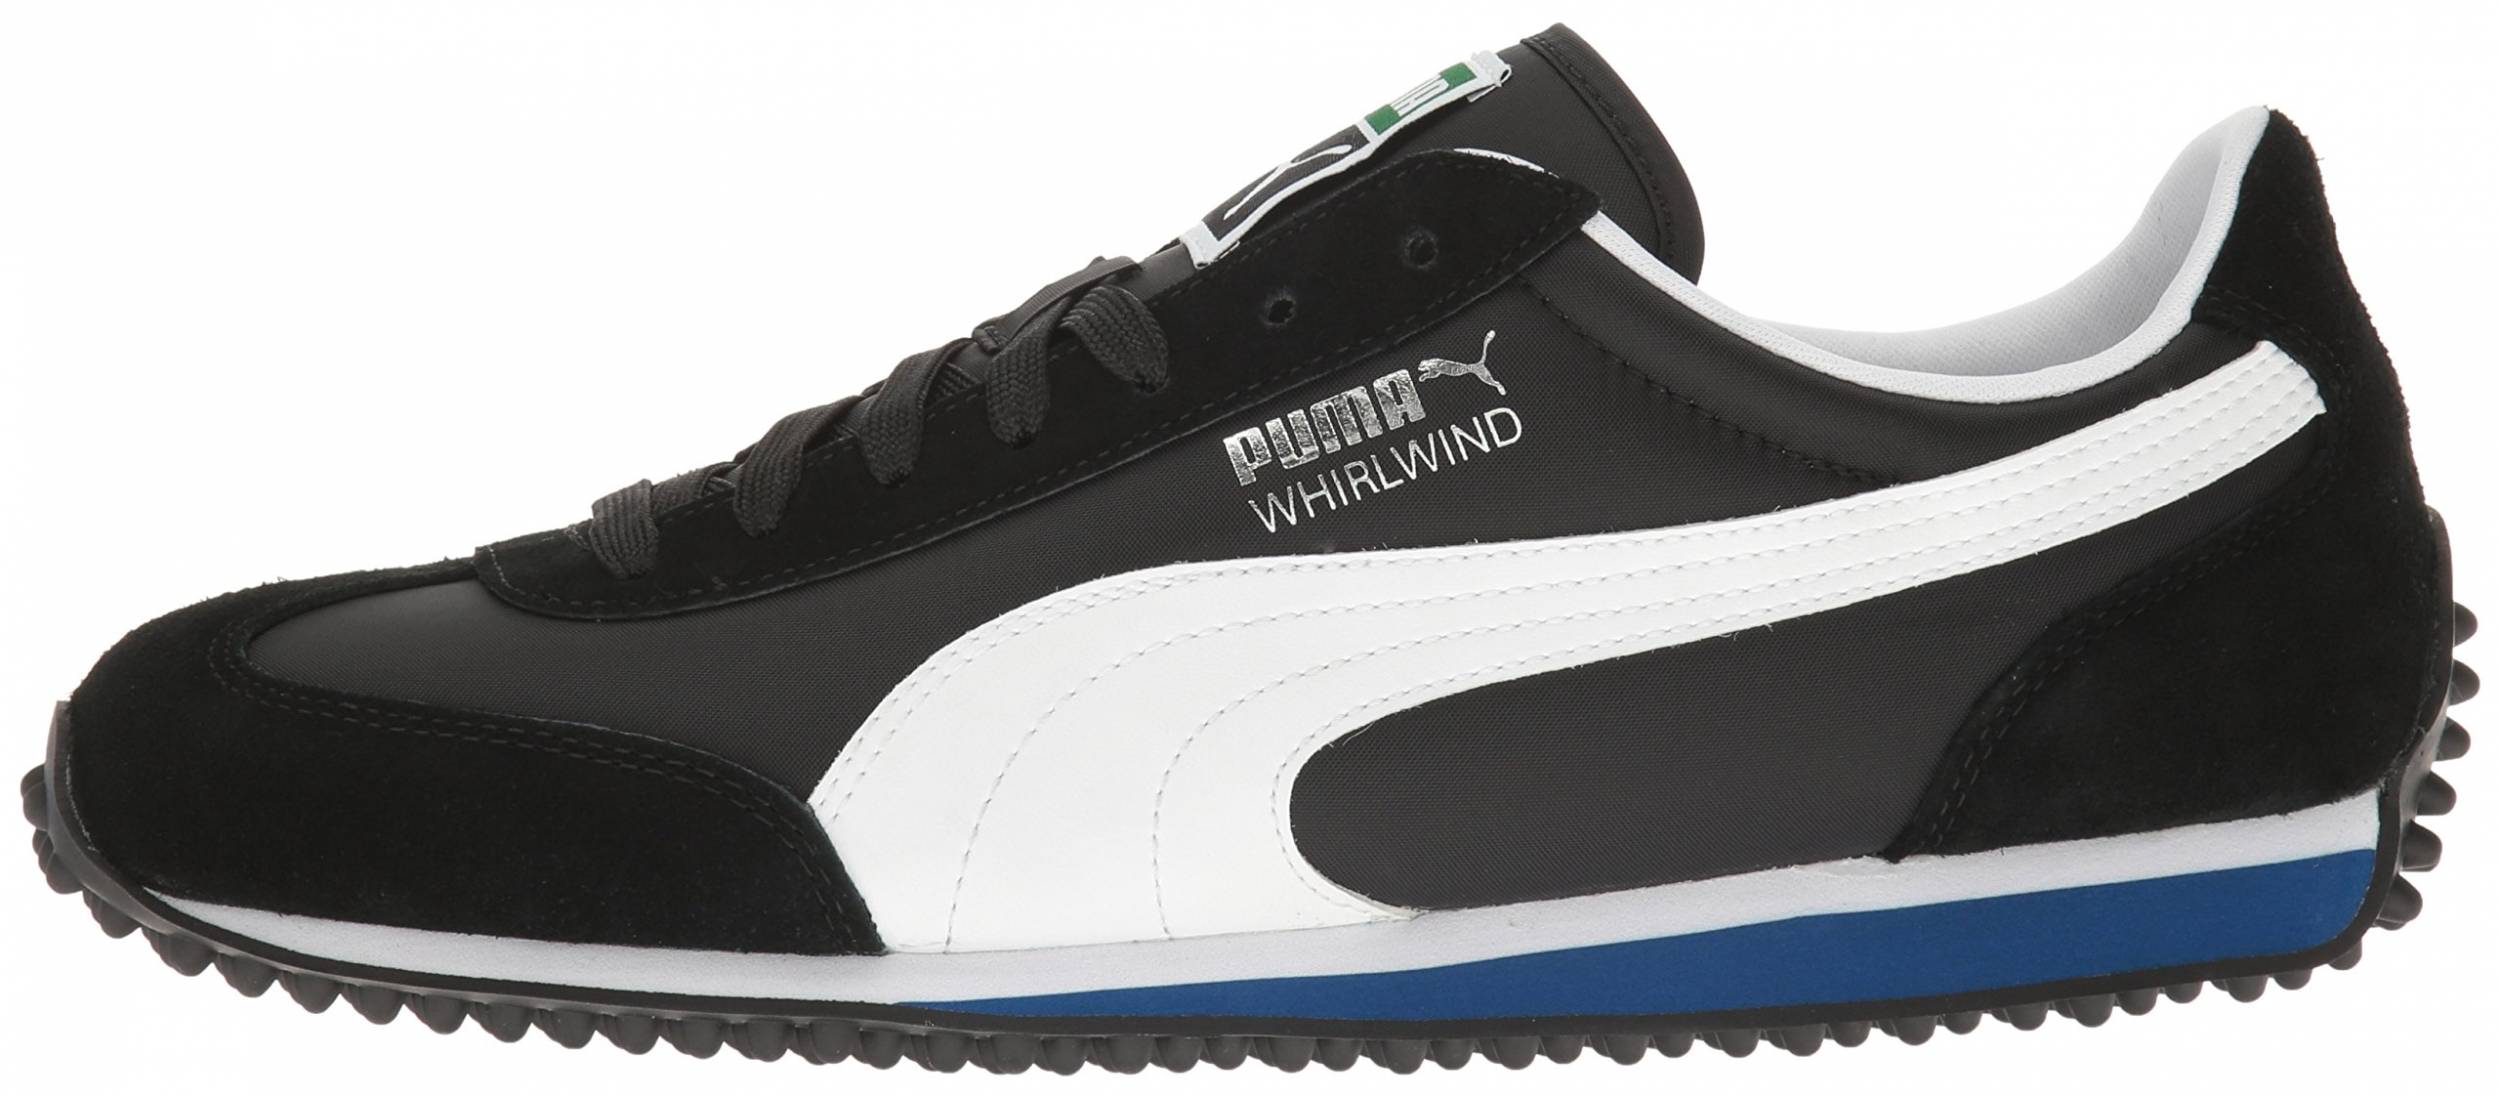 Puma Whirlwind Classic sneakers | RunRepeat